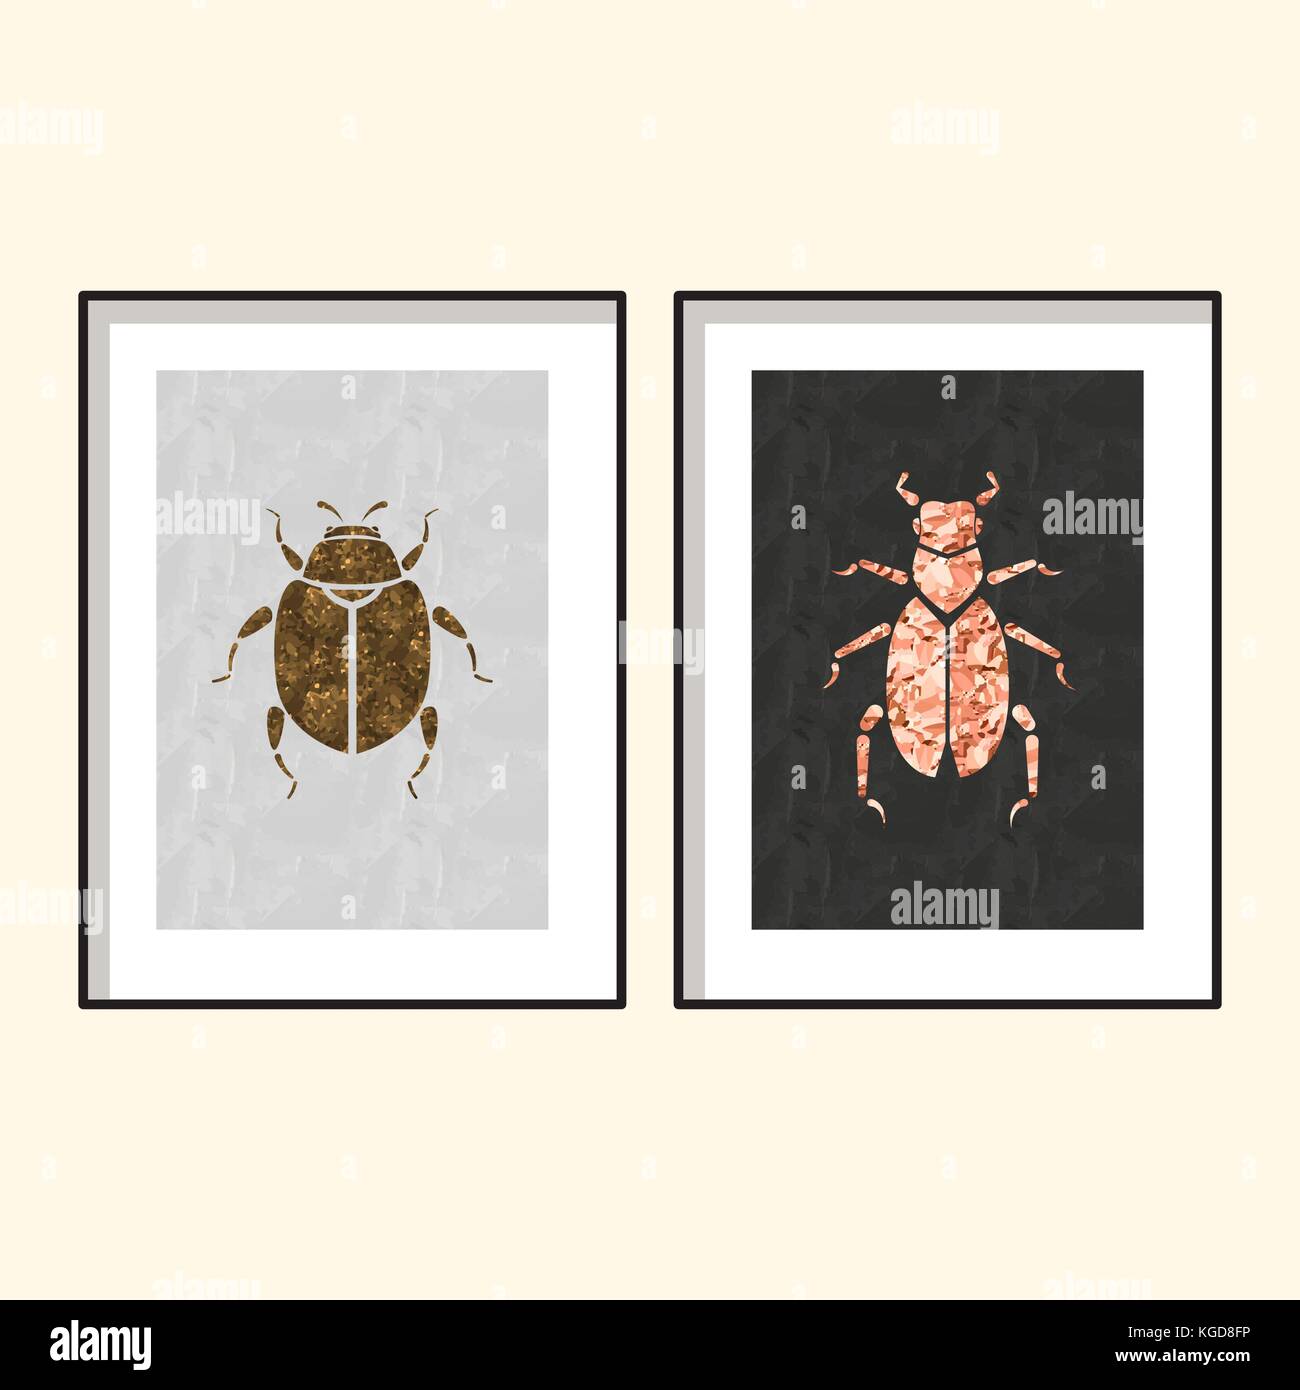 Beetle wall poster art designs vector. Stock Vector